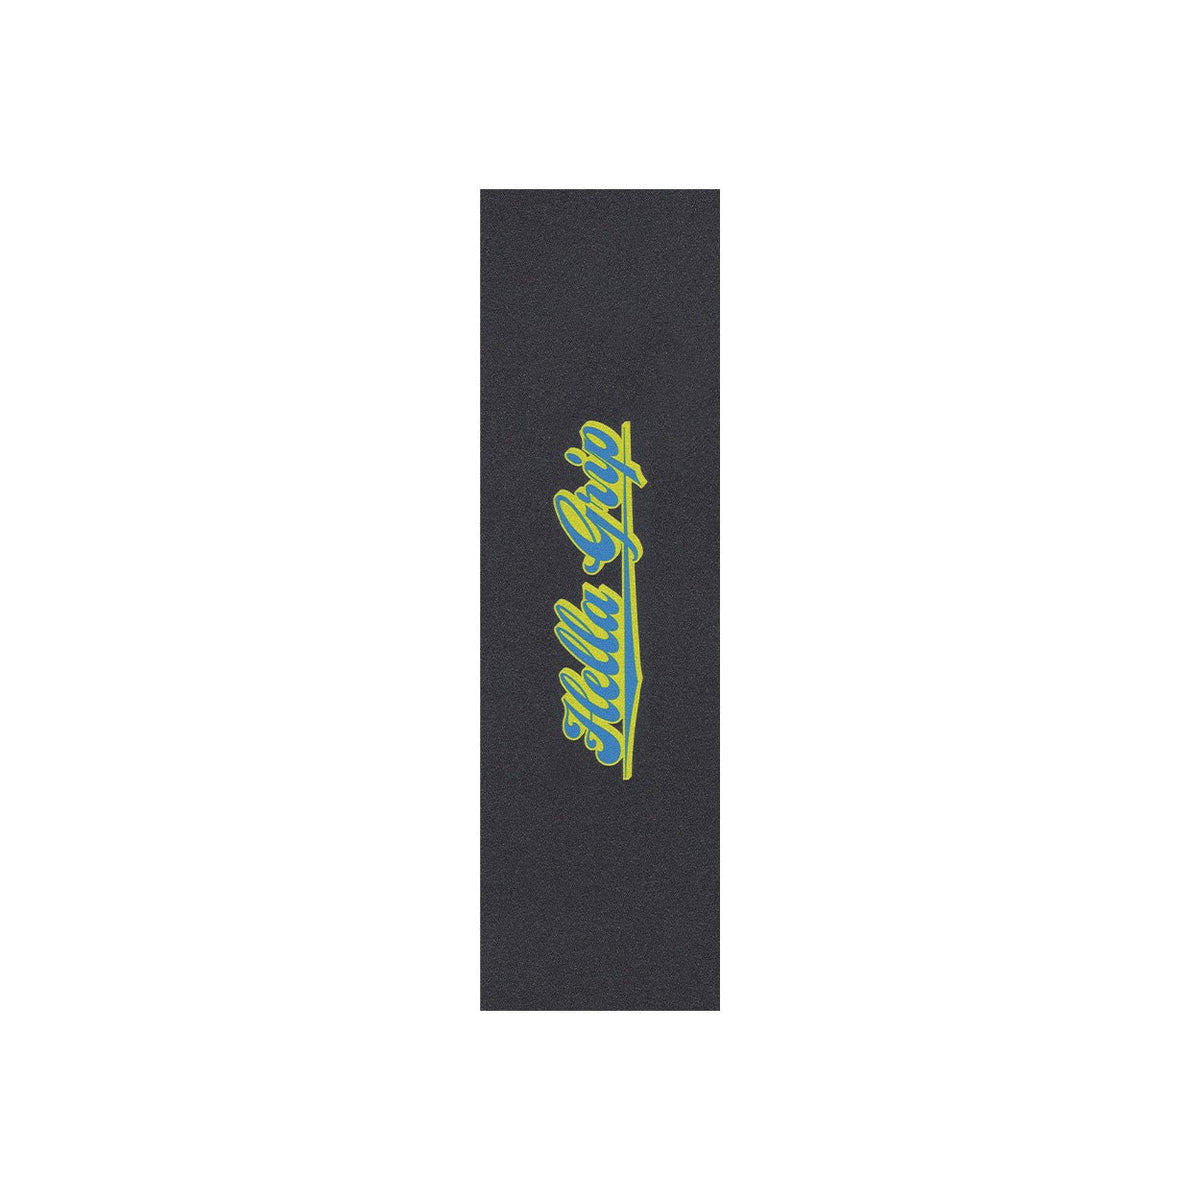 Hella Grip Classic Logo Grip Tape